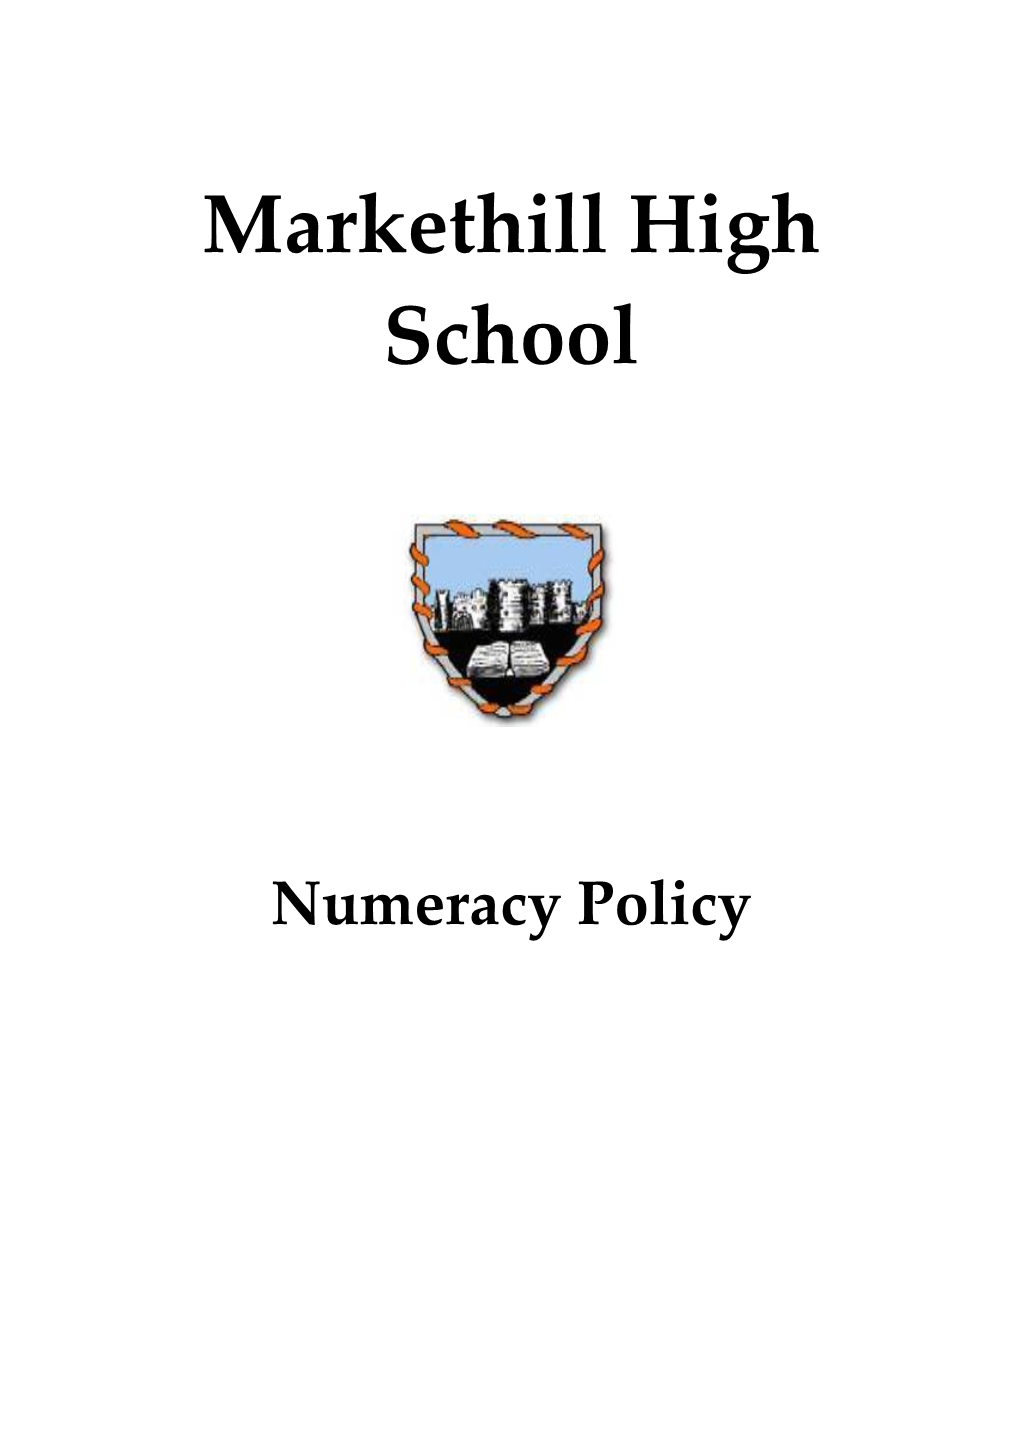 Markethill High School